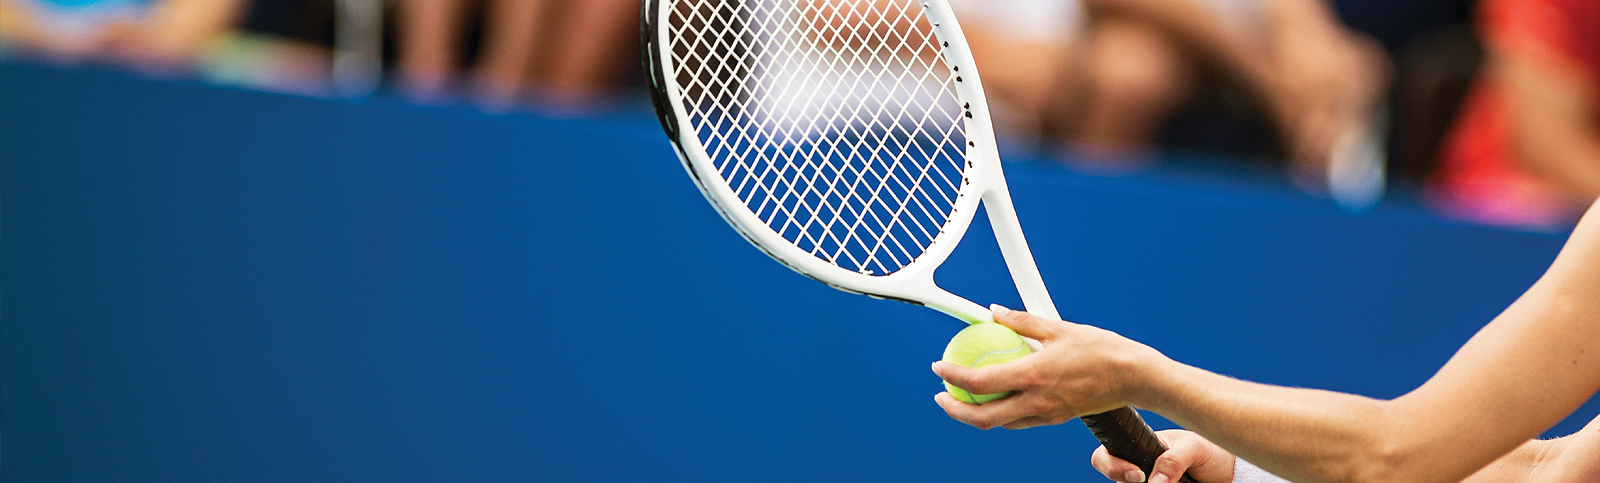 Tennis Elbow image